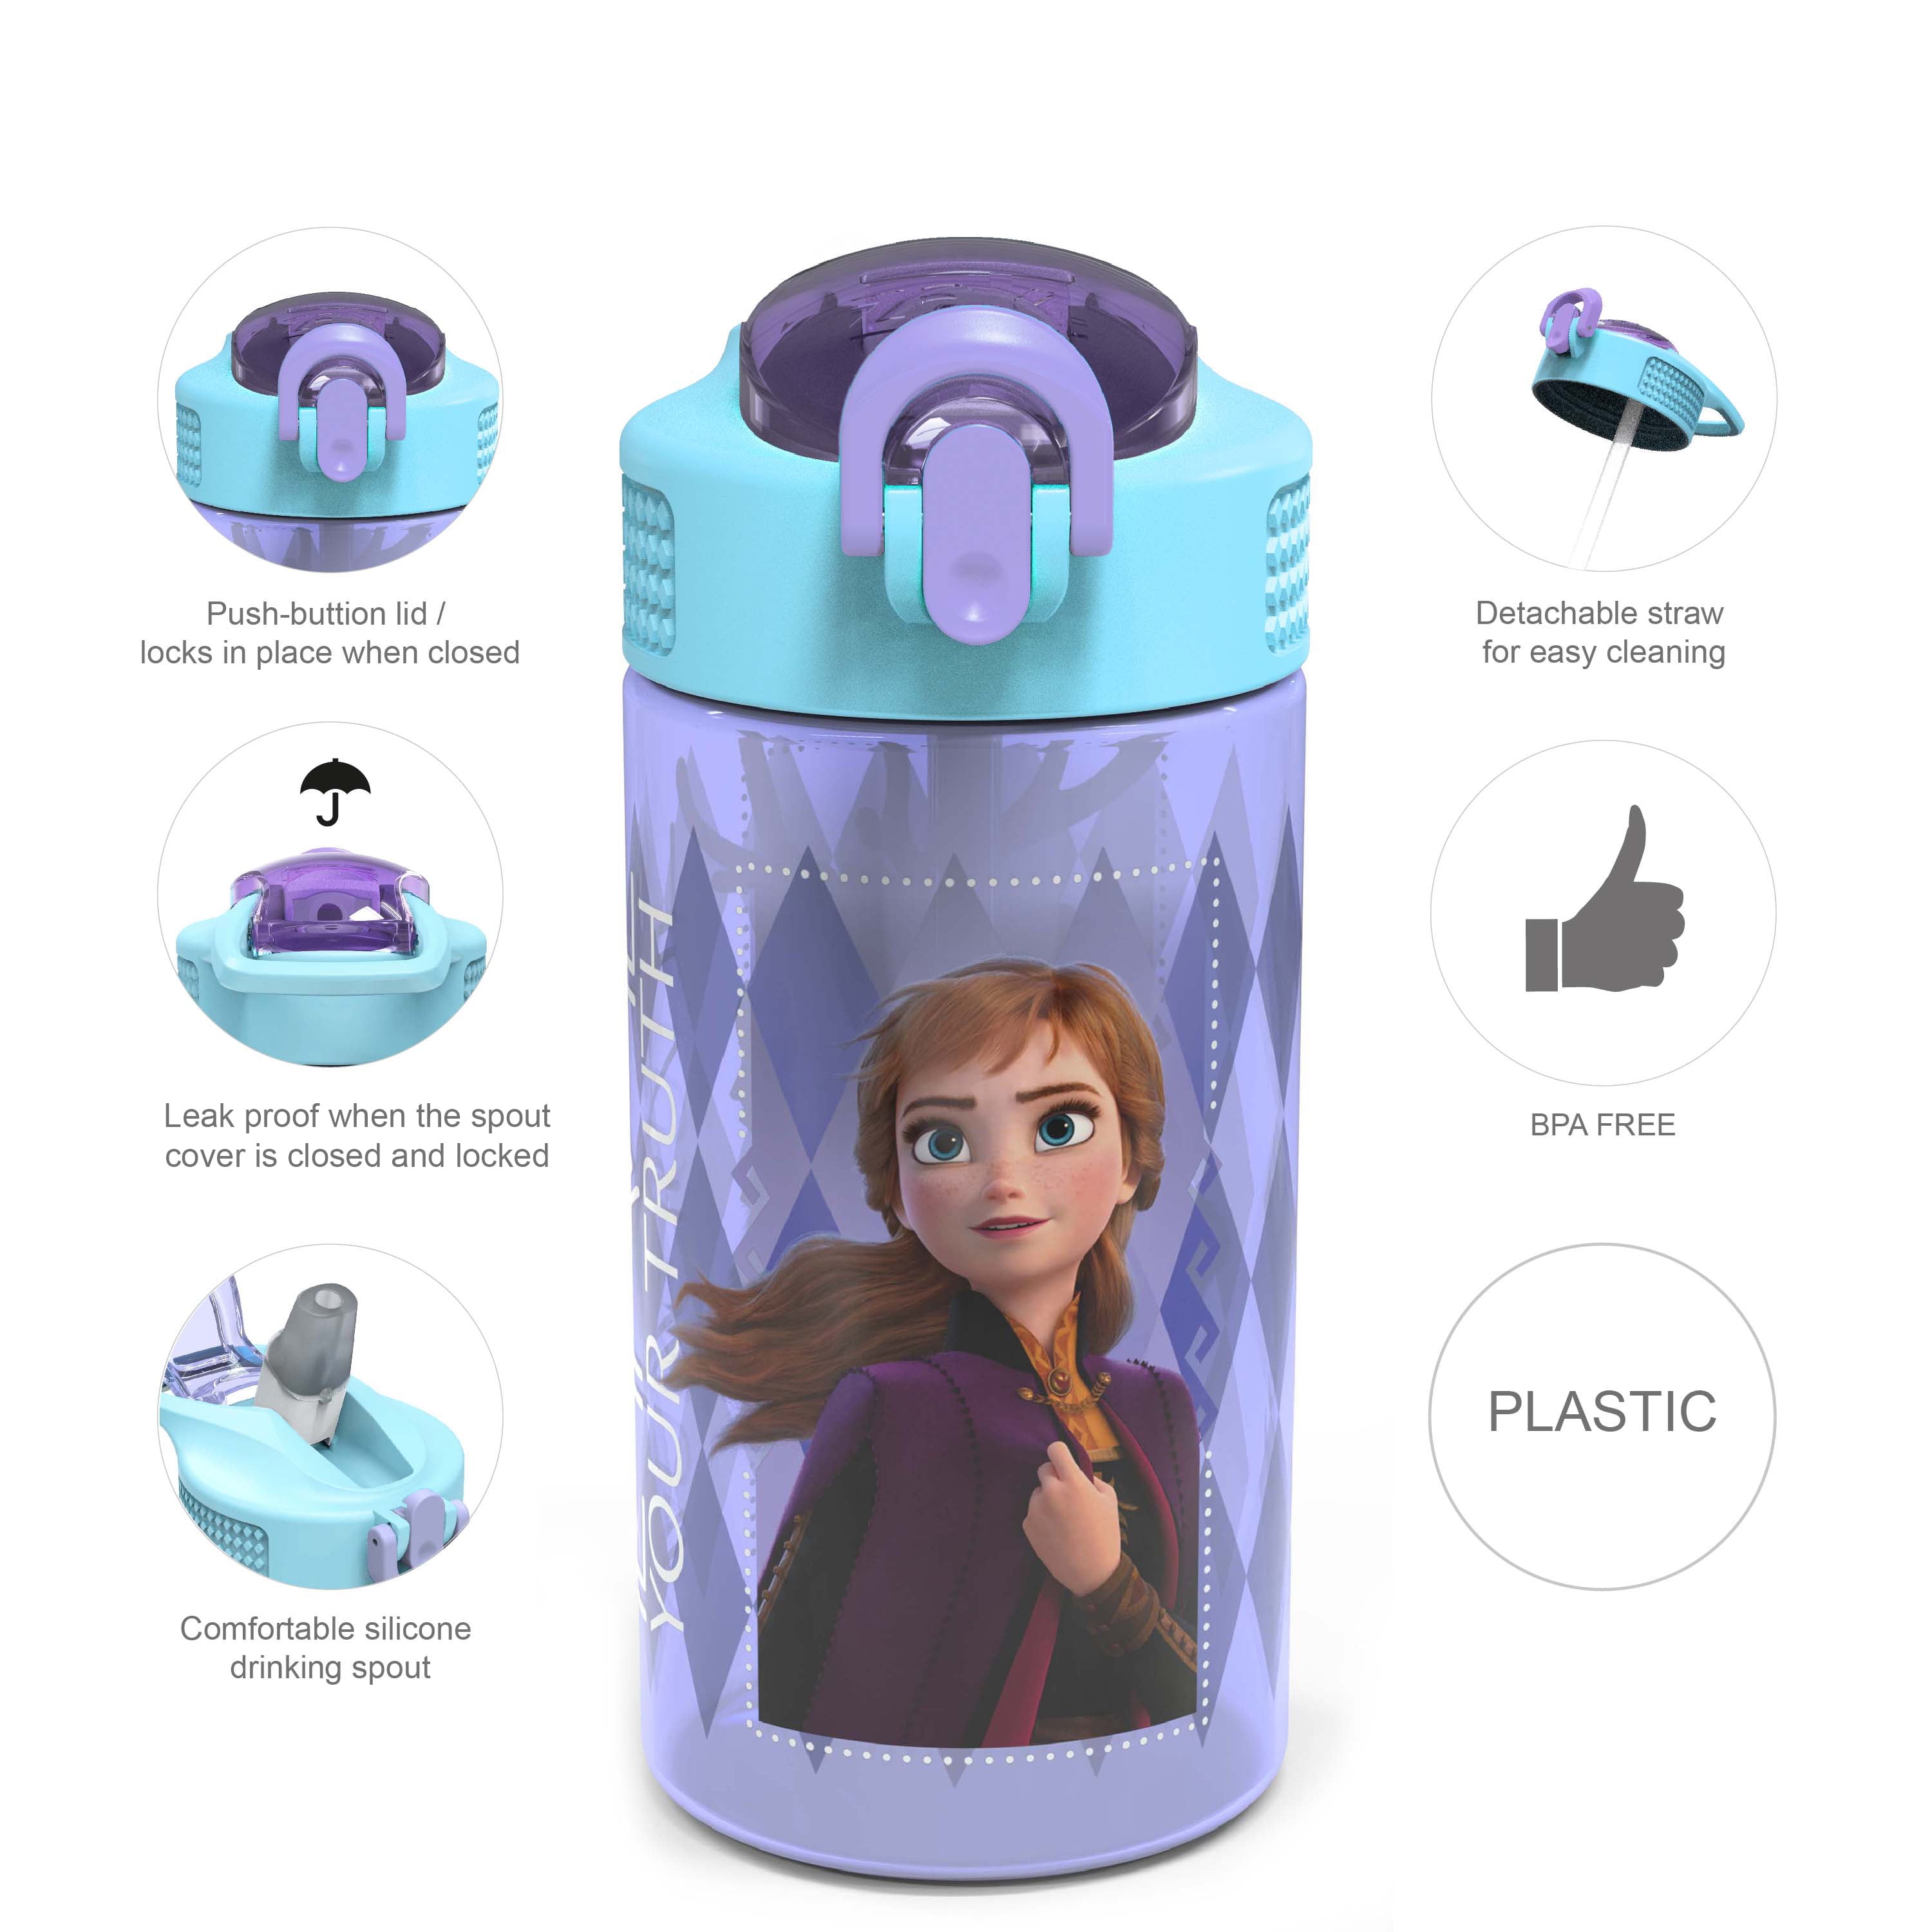 Toy Story Plastic Water Bottle - Zak Designs 17.5 oz